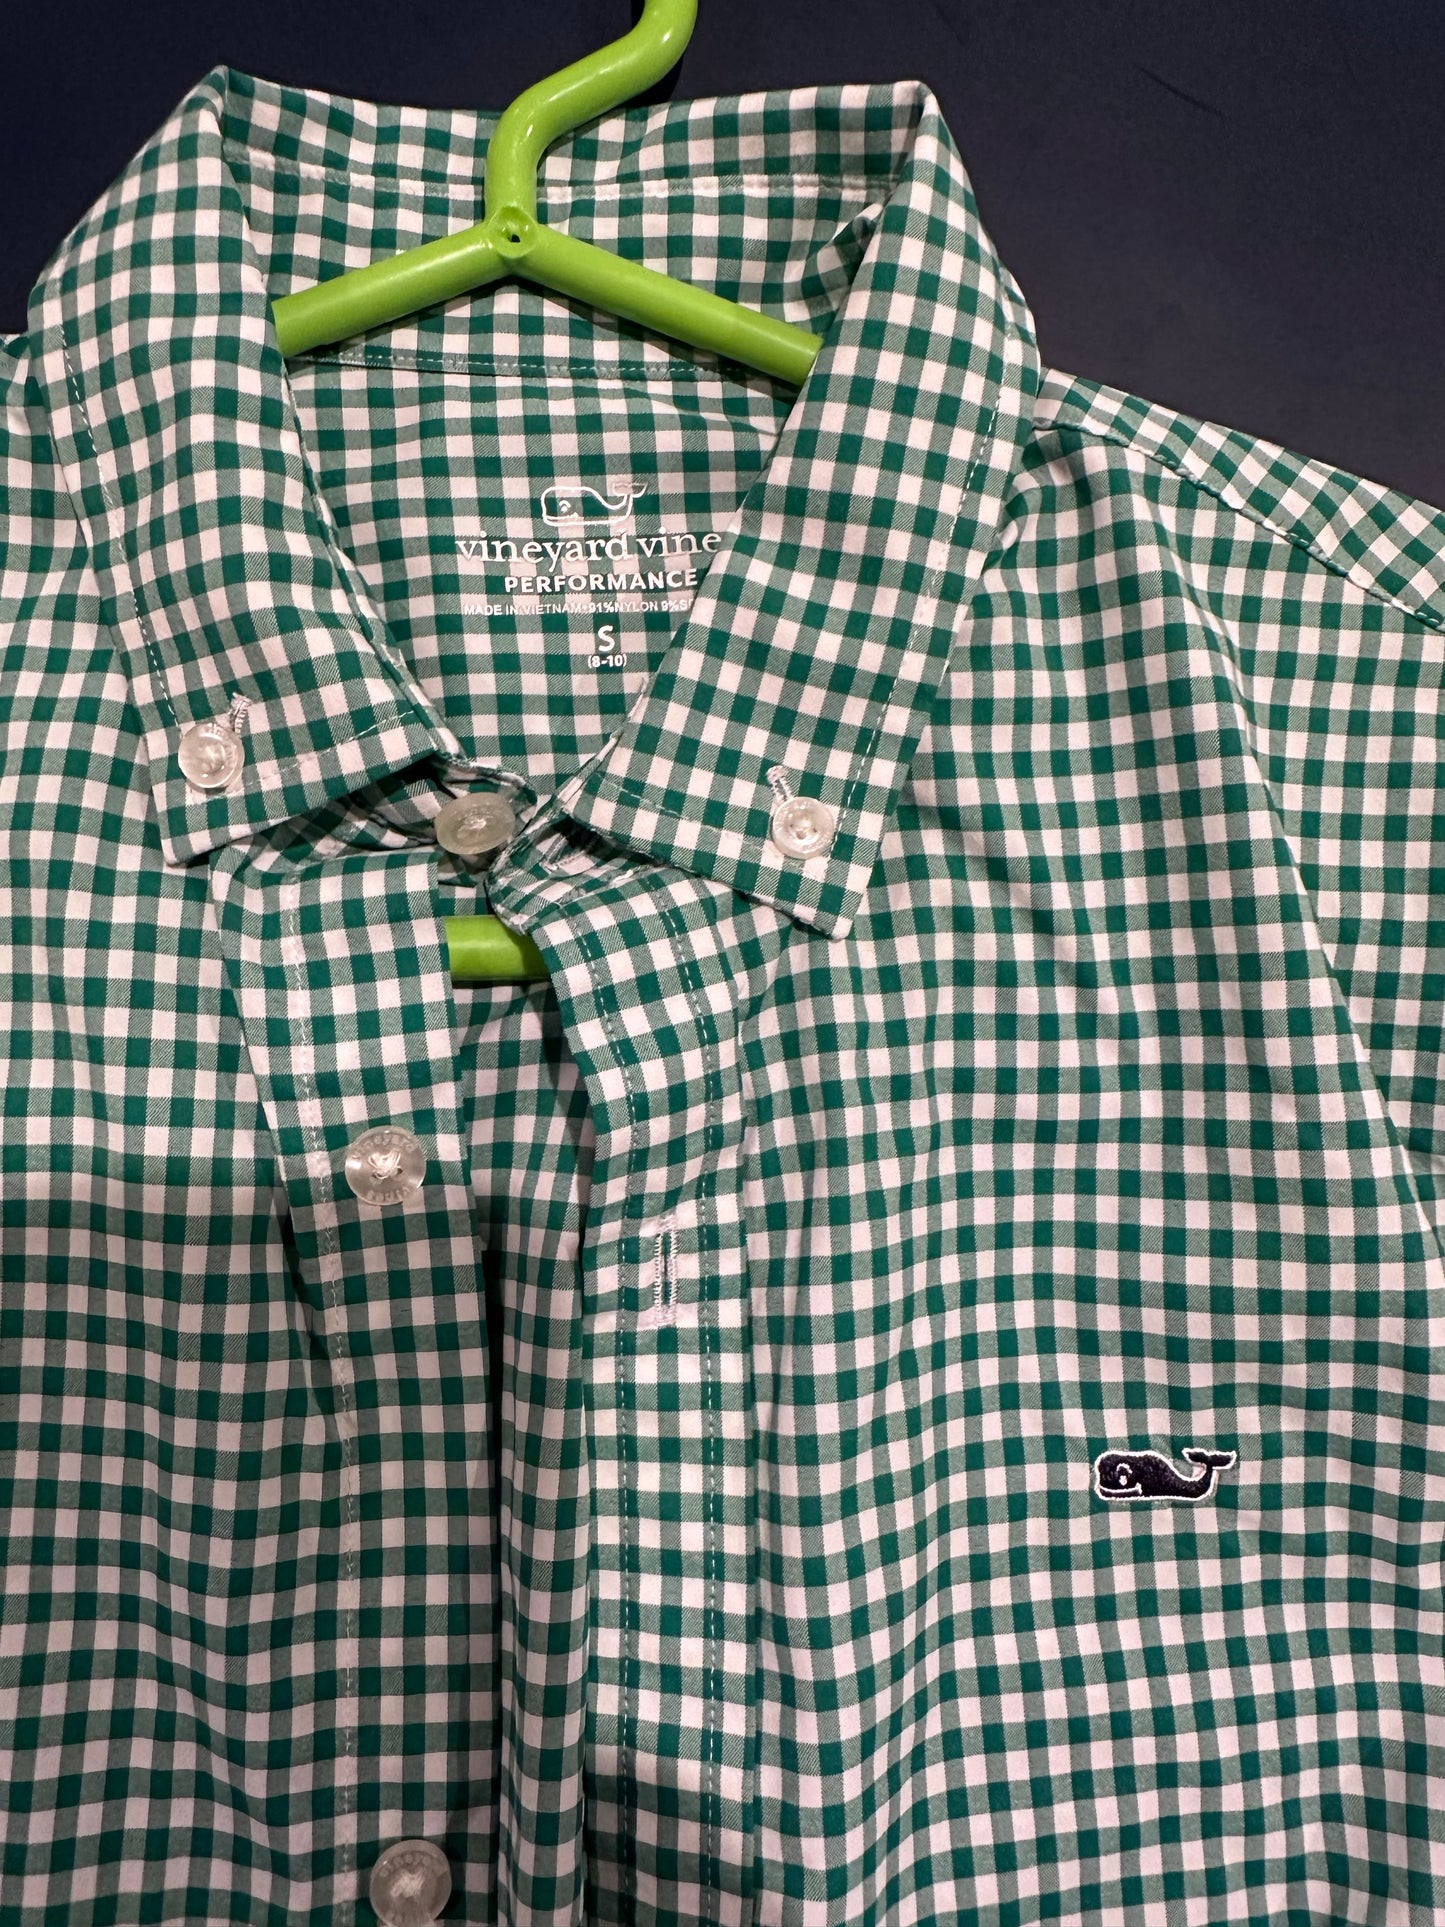 Vineyard Vines Boys Size Small 8-10 Green Gingham  Button Down Shirt Performance